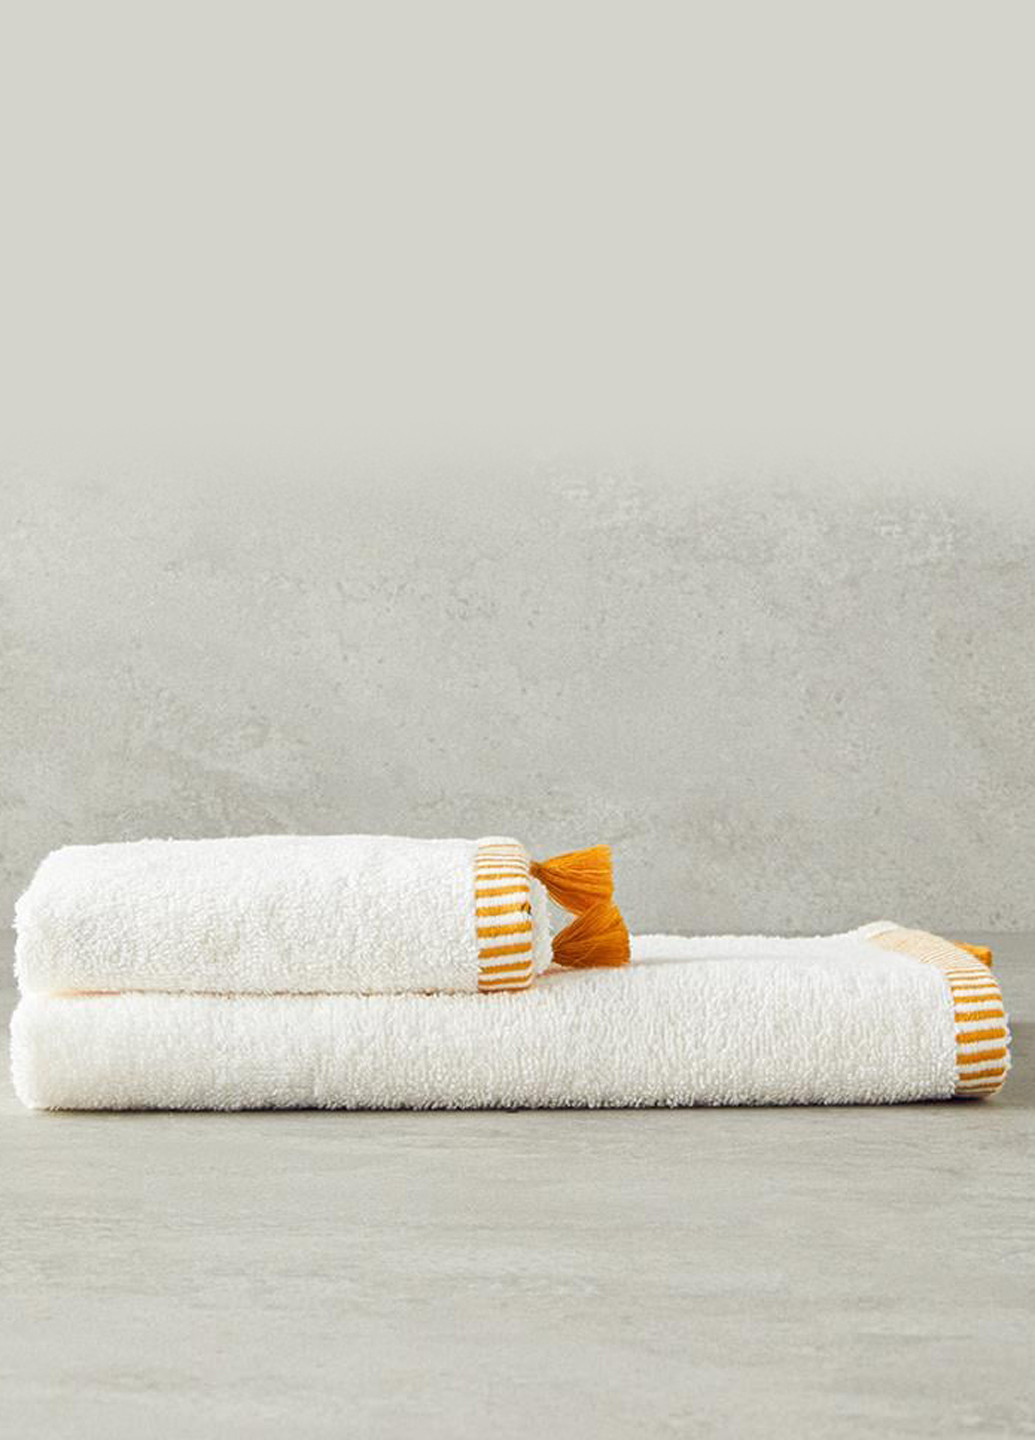 English Home полотенце для рук, 30х45 см полоска желтый производство - Турция